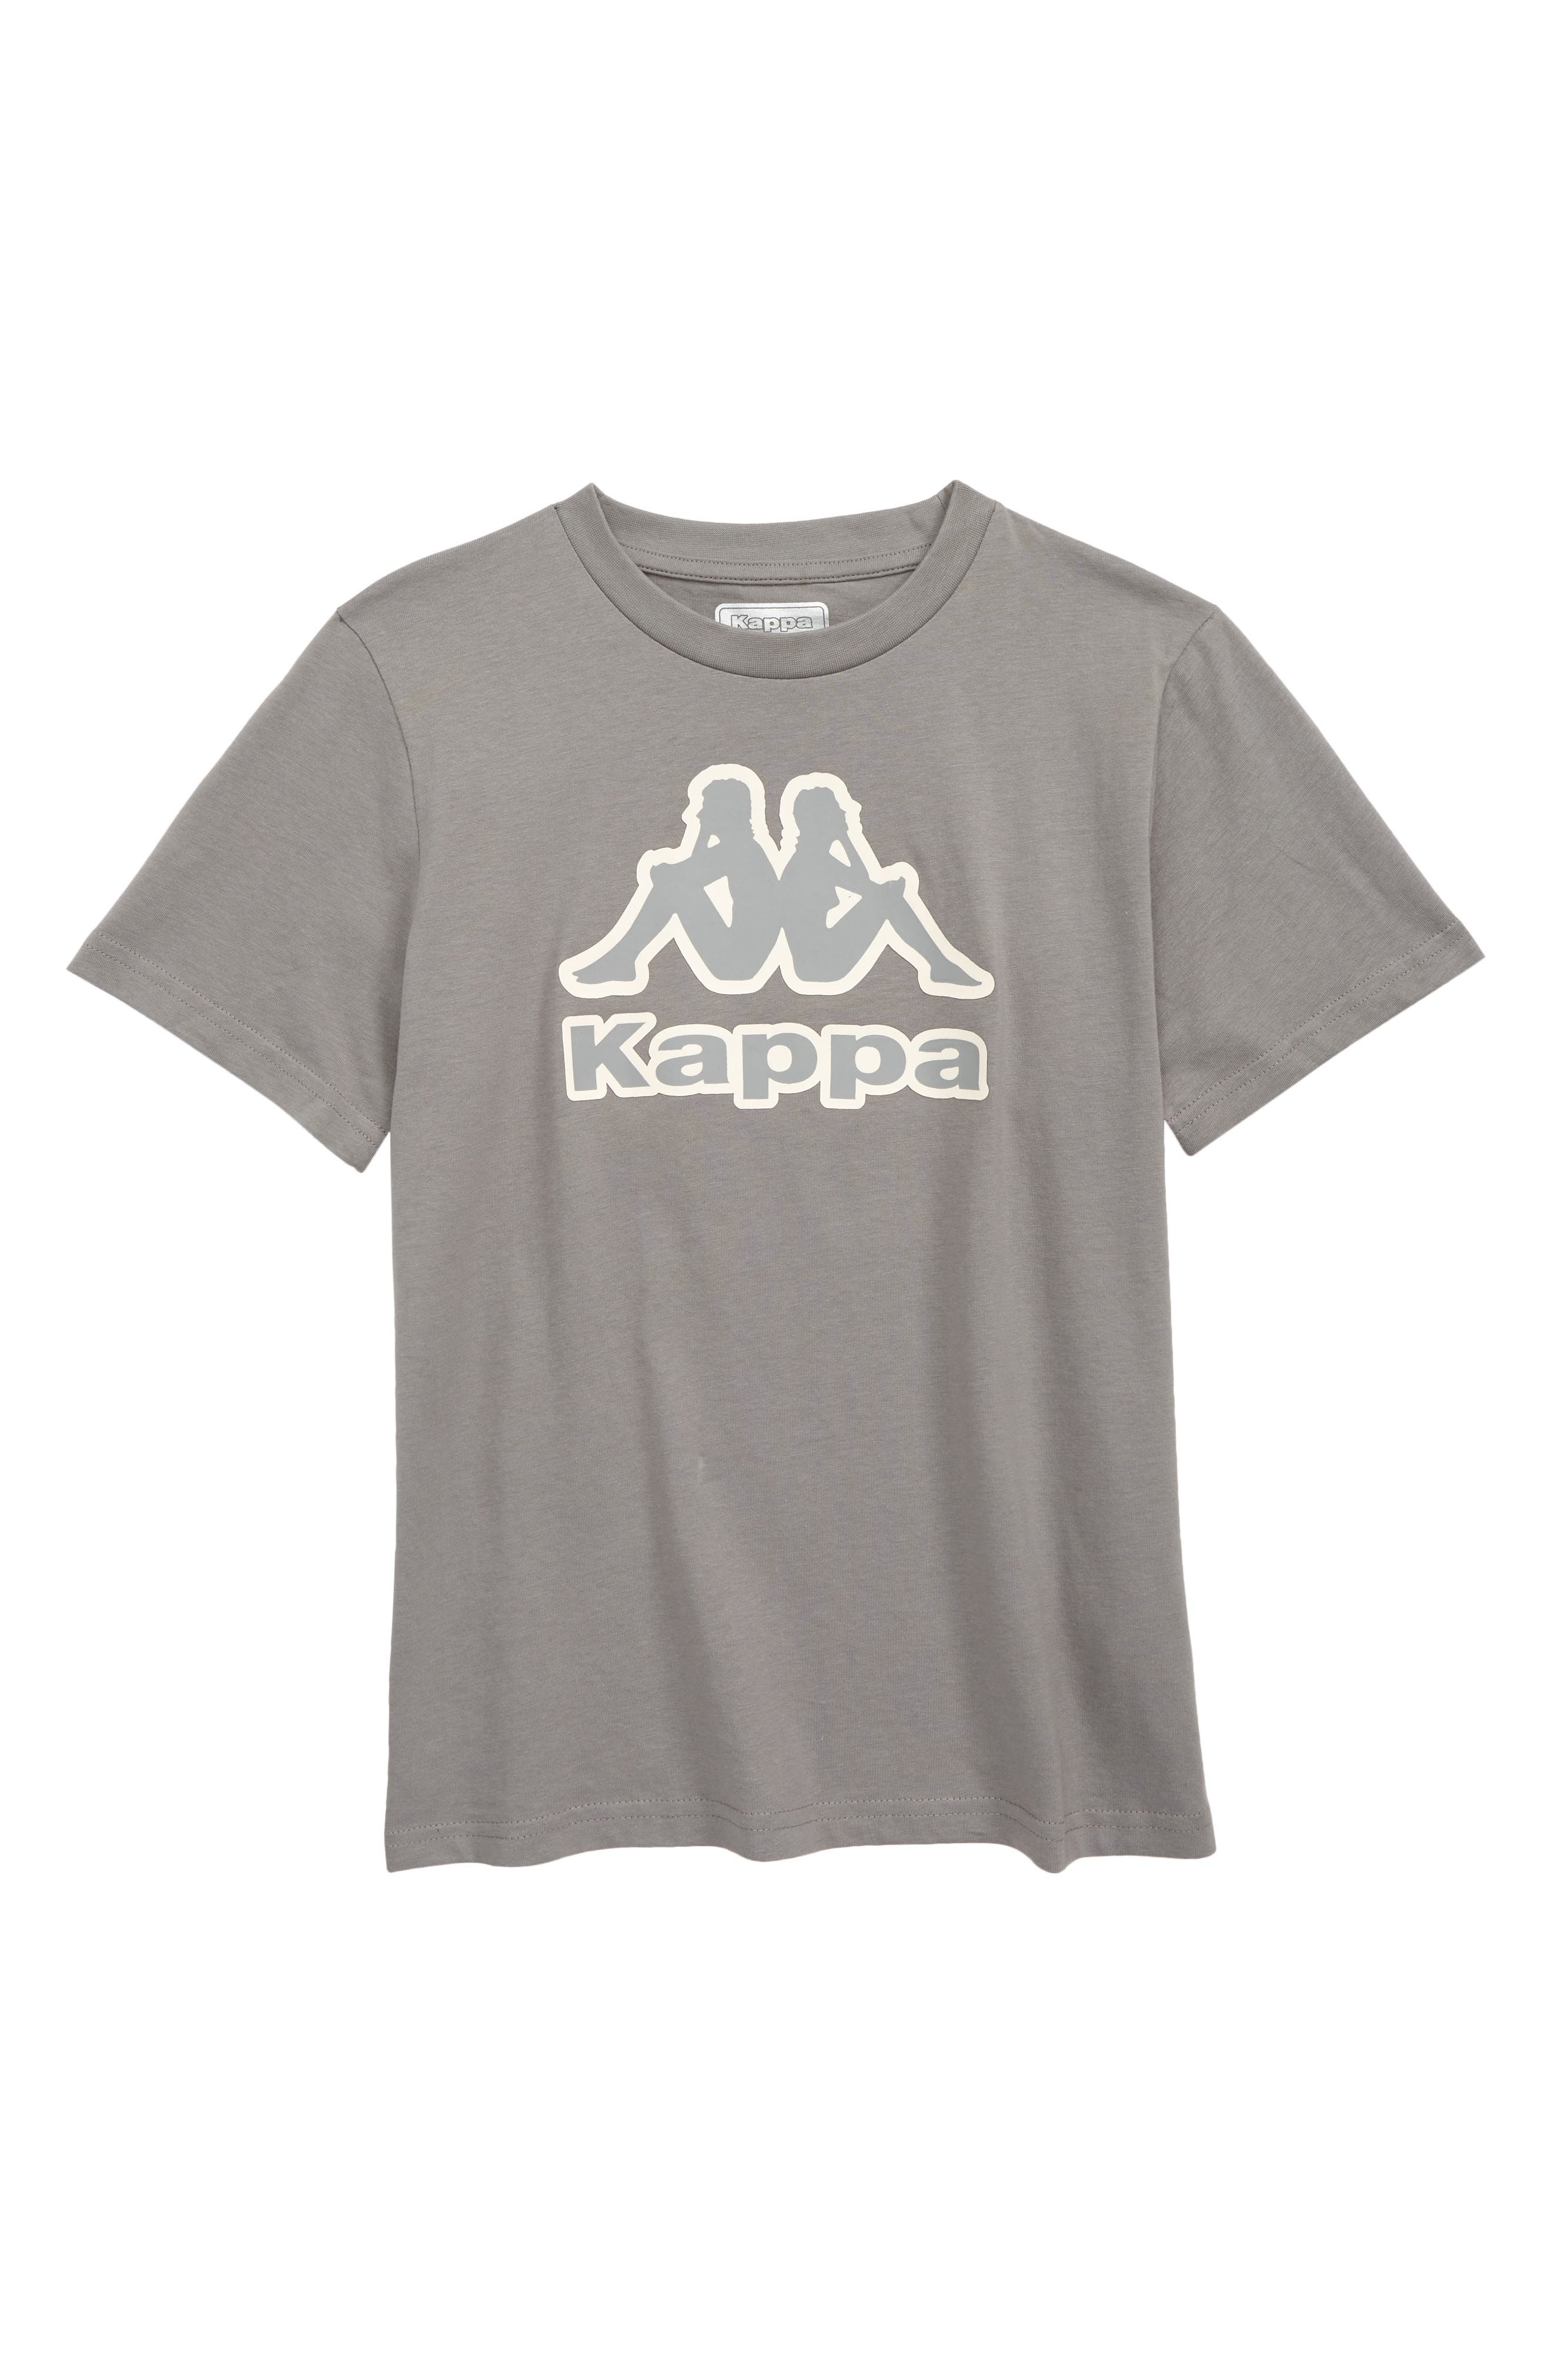 Kappa Kids' Logo T-Shirt in Grey at Nordstrom, Size 12Y Us